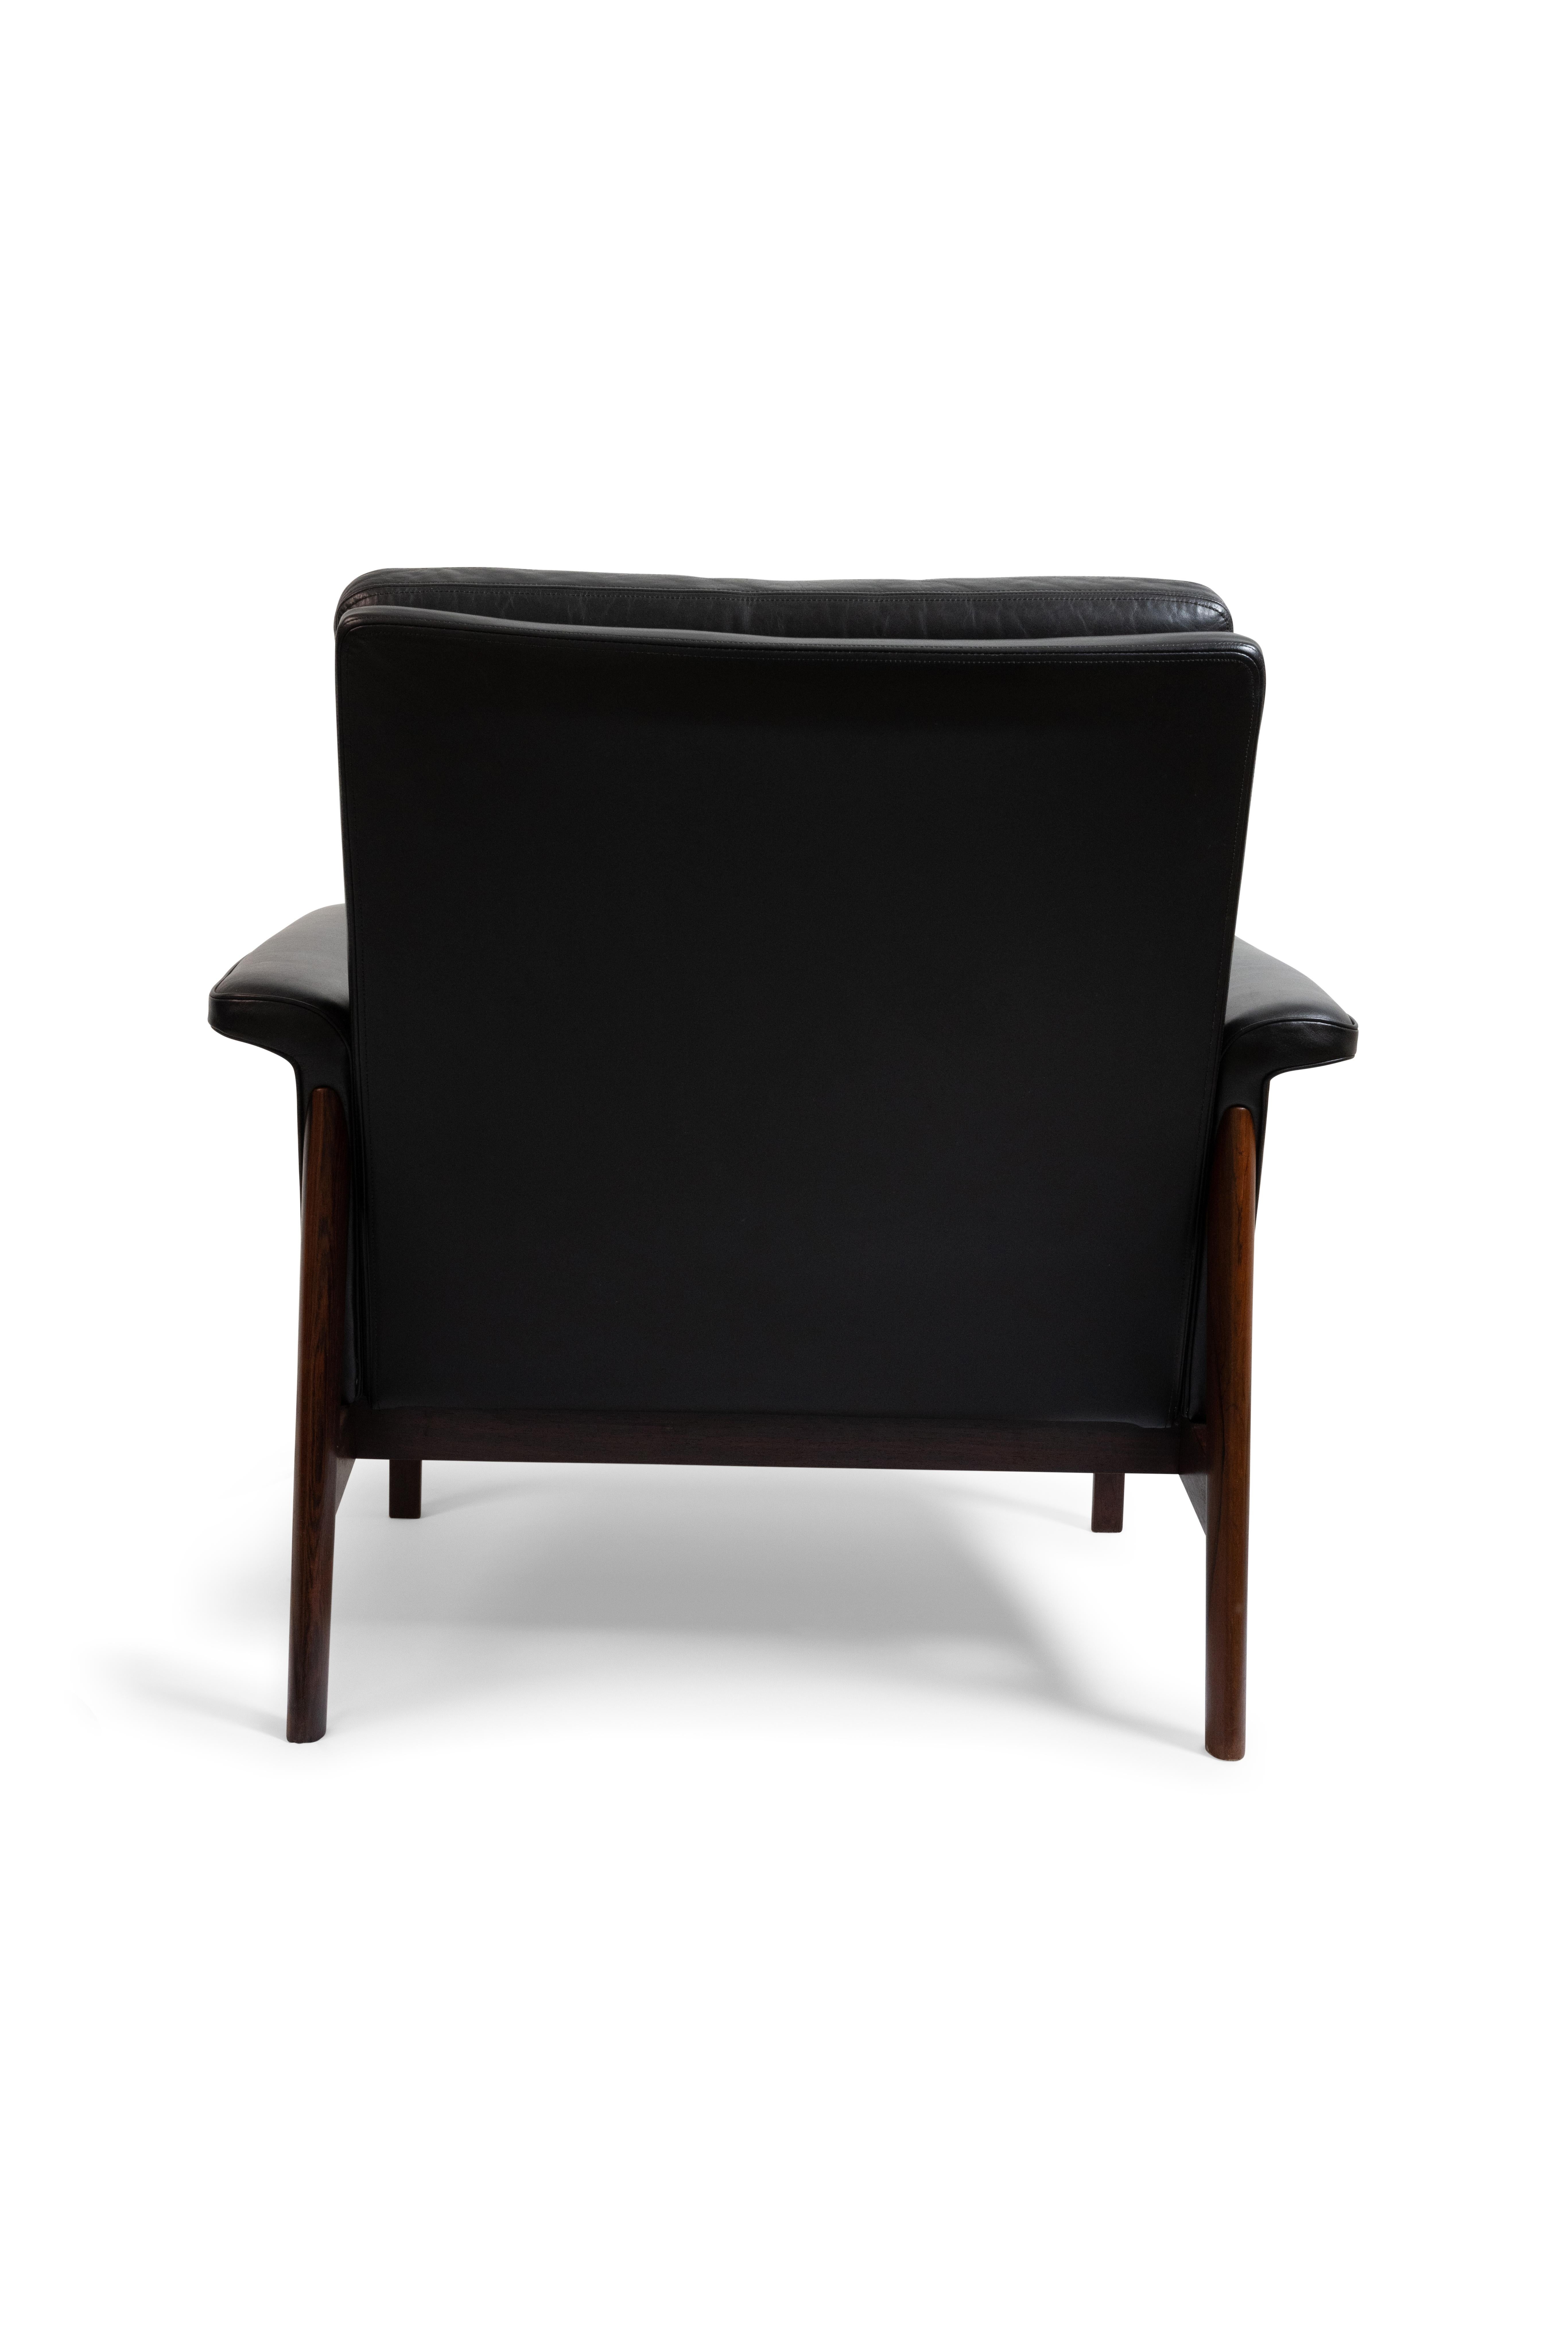 Scandinavian Modern Finn Juhl Three Seat Sofa with Original Black Leather, Model 218/3, Denmark For Sale